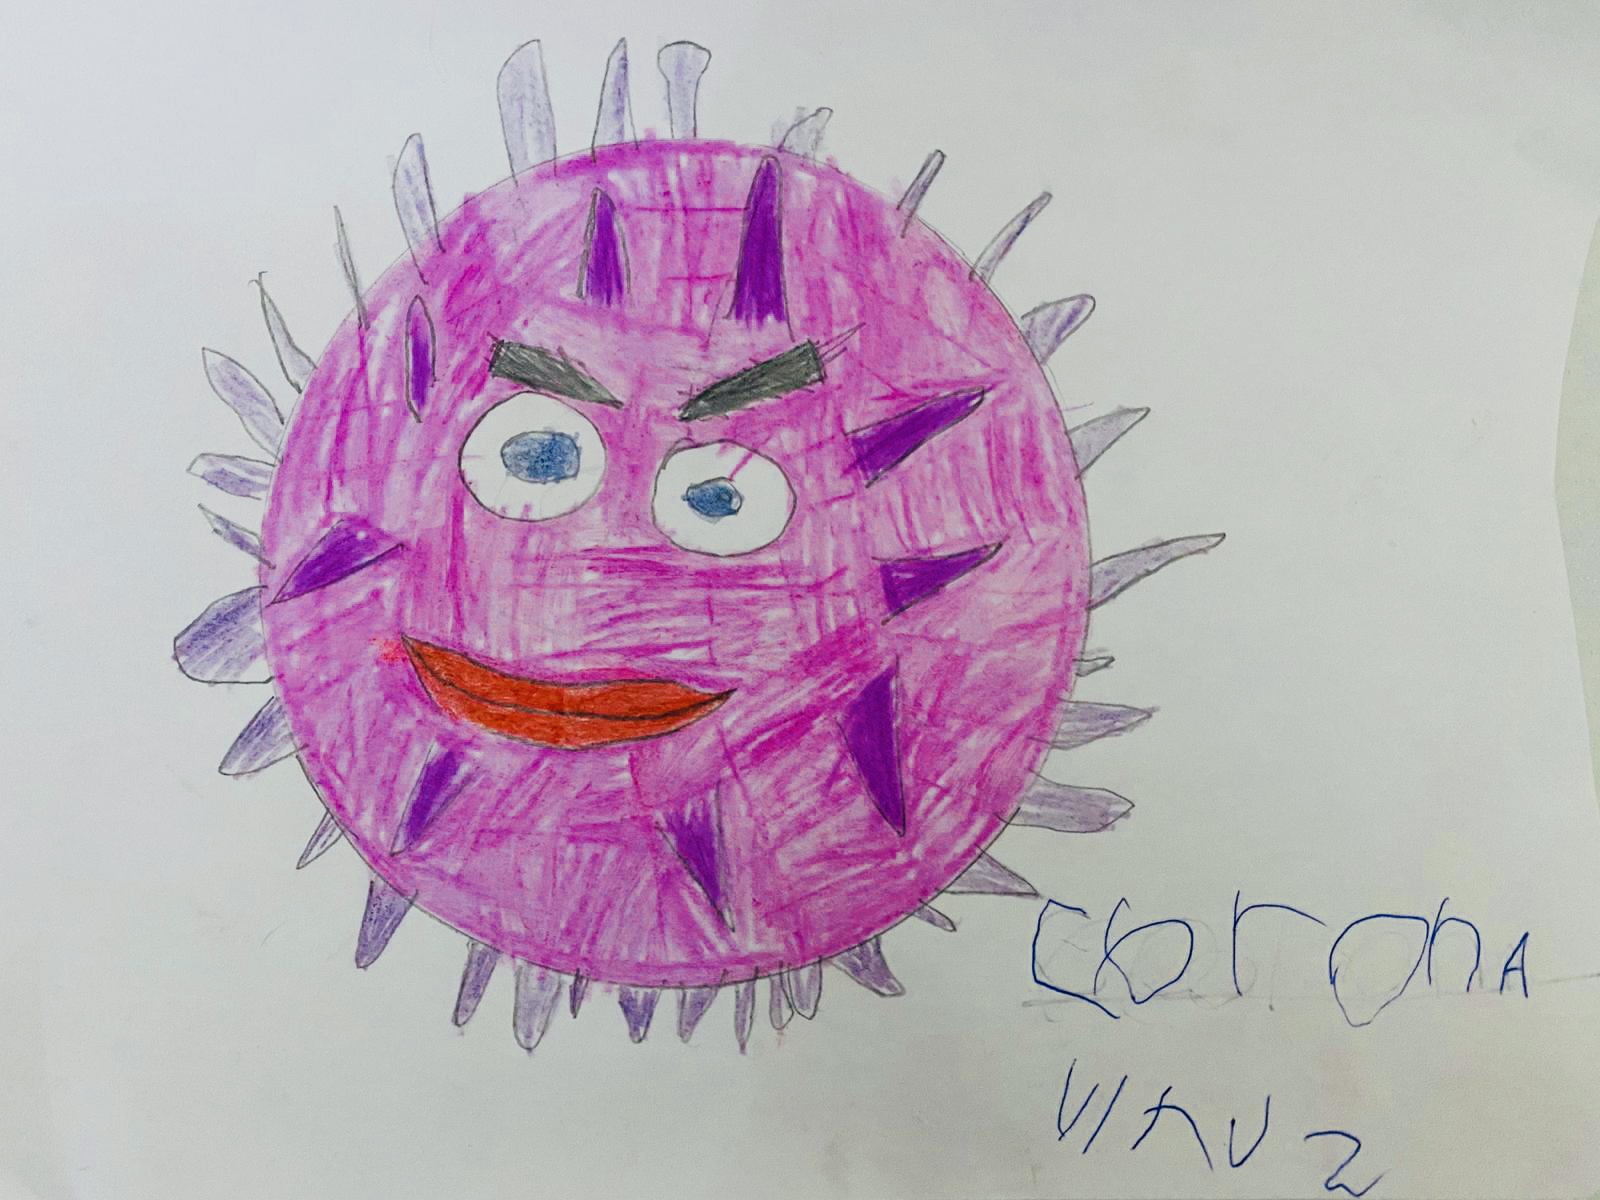 'Corona virus' by Maimoonah (4) from Dublin